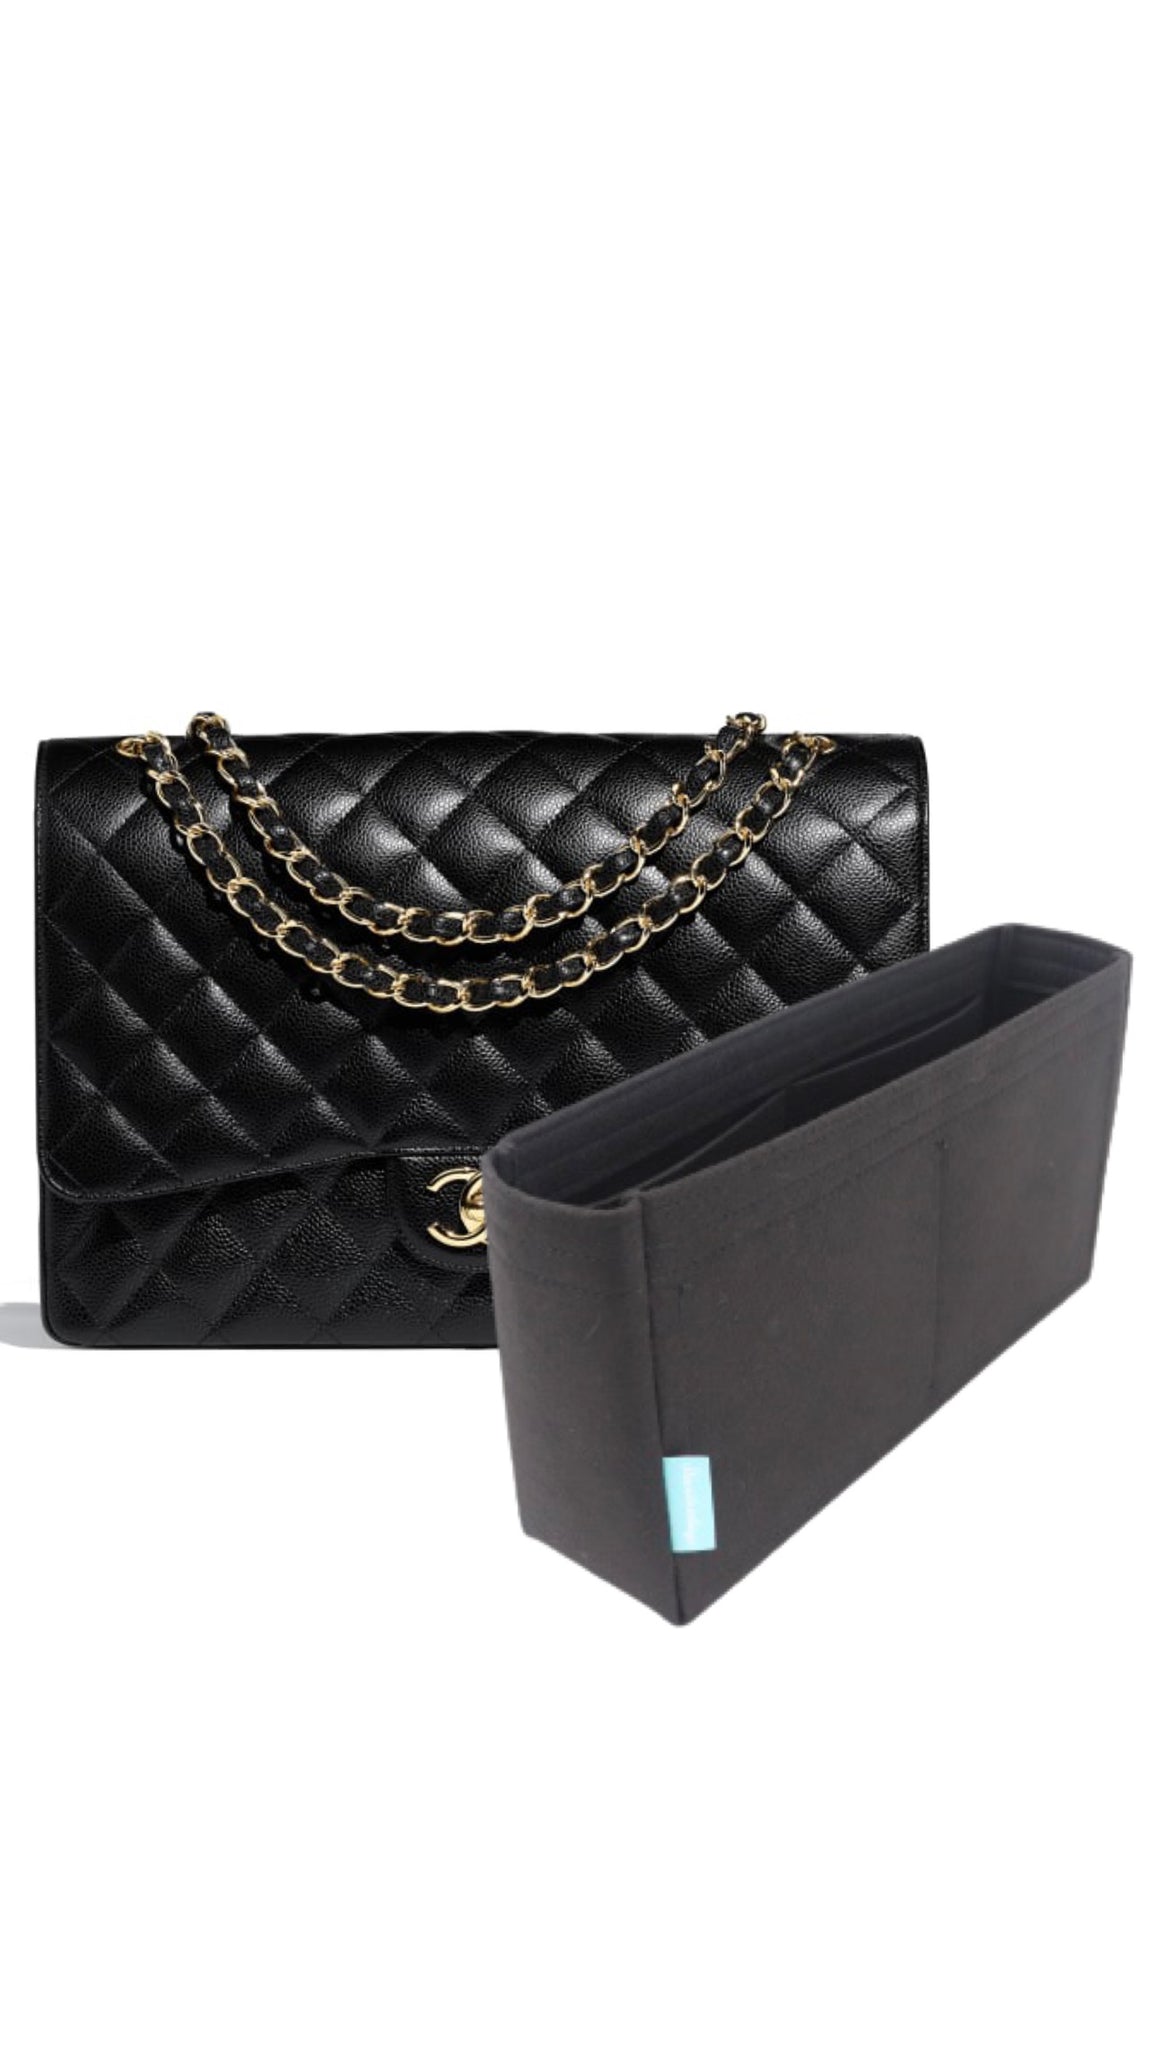 Chanel Classic Flap Handbag Organizer custom made 50+ colors – ByAsteria